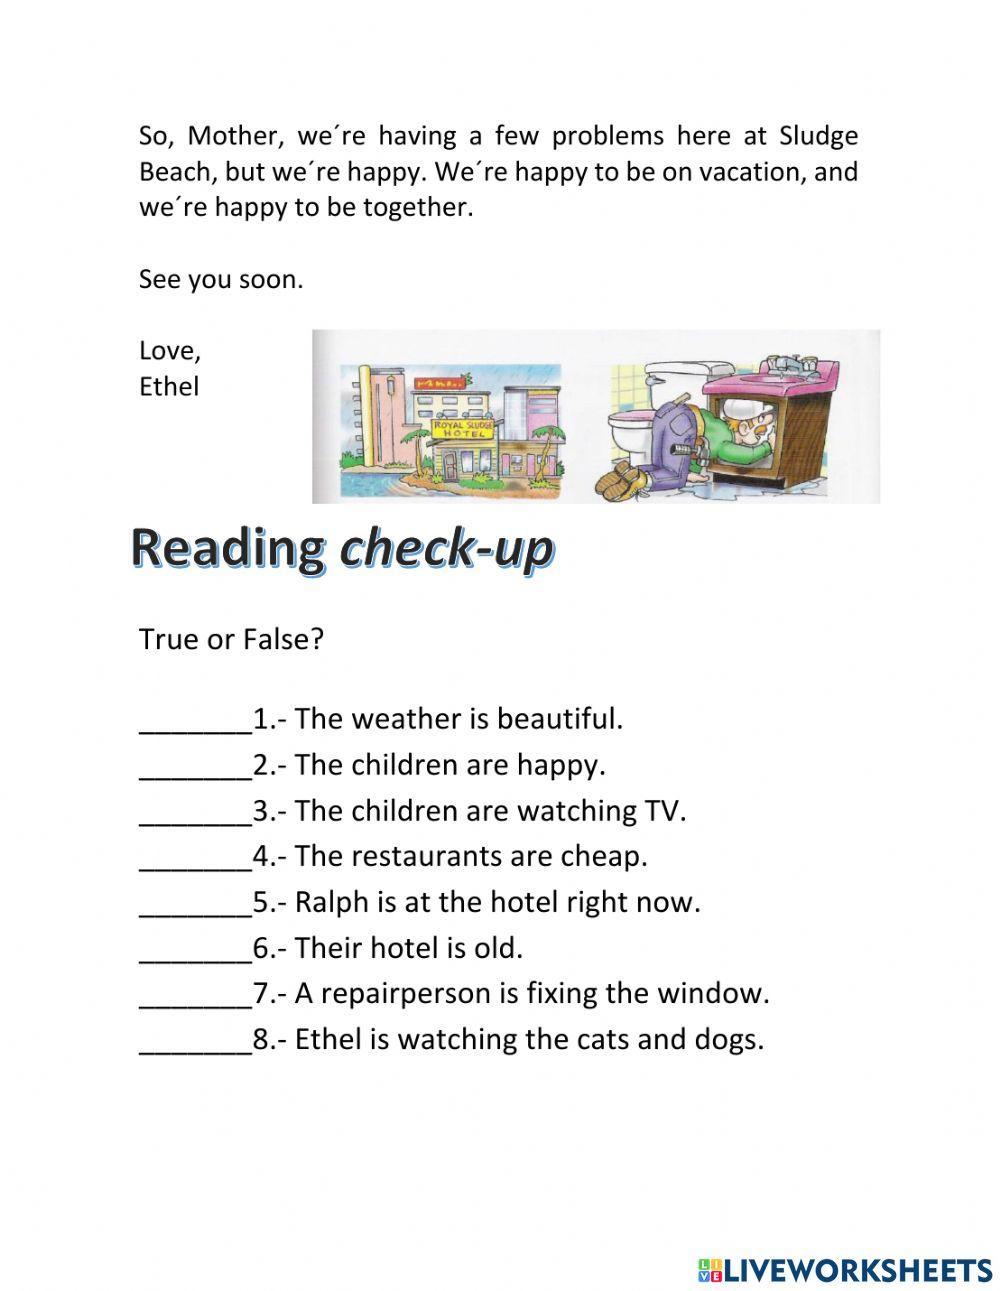 Dear mother- Royal Sludge hotel reading